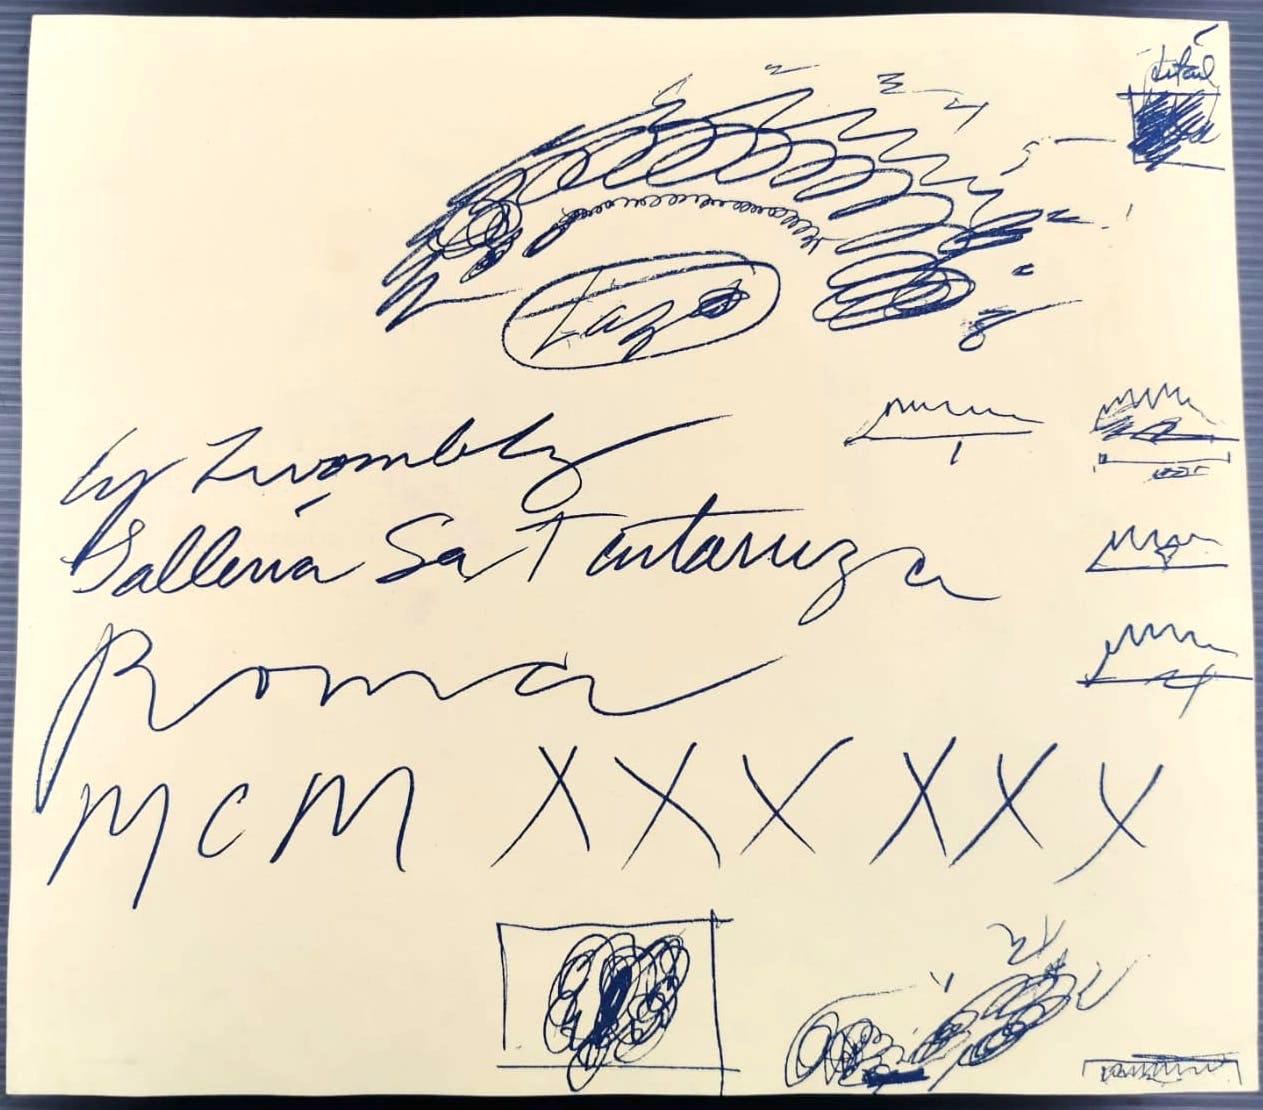 Leaflet de l'exposition Cy Twombly - Galleria La Tartaruga 1960 - Contemporain Art par (after) Cy Twombly